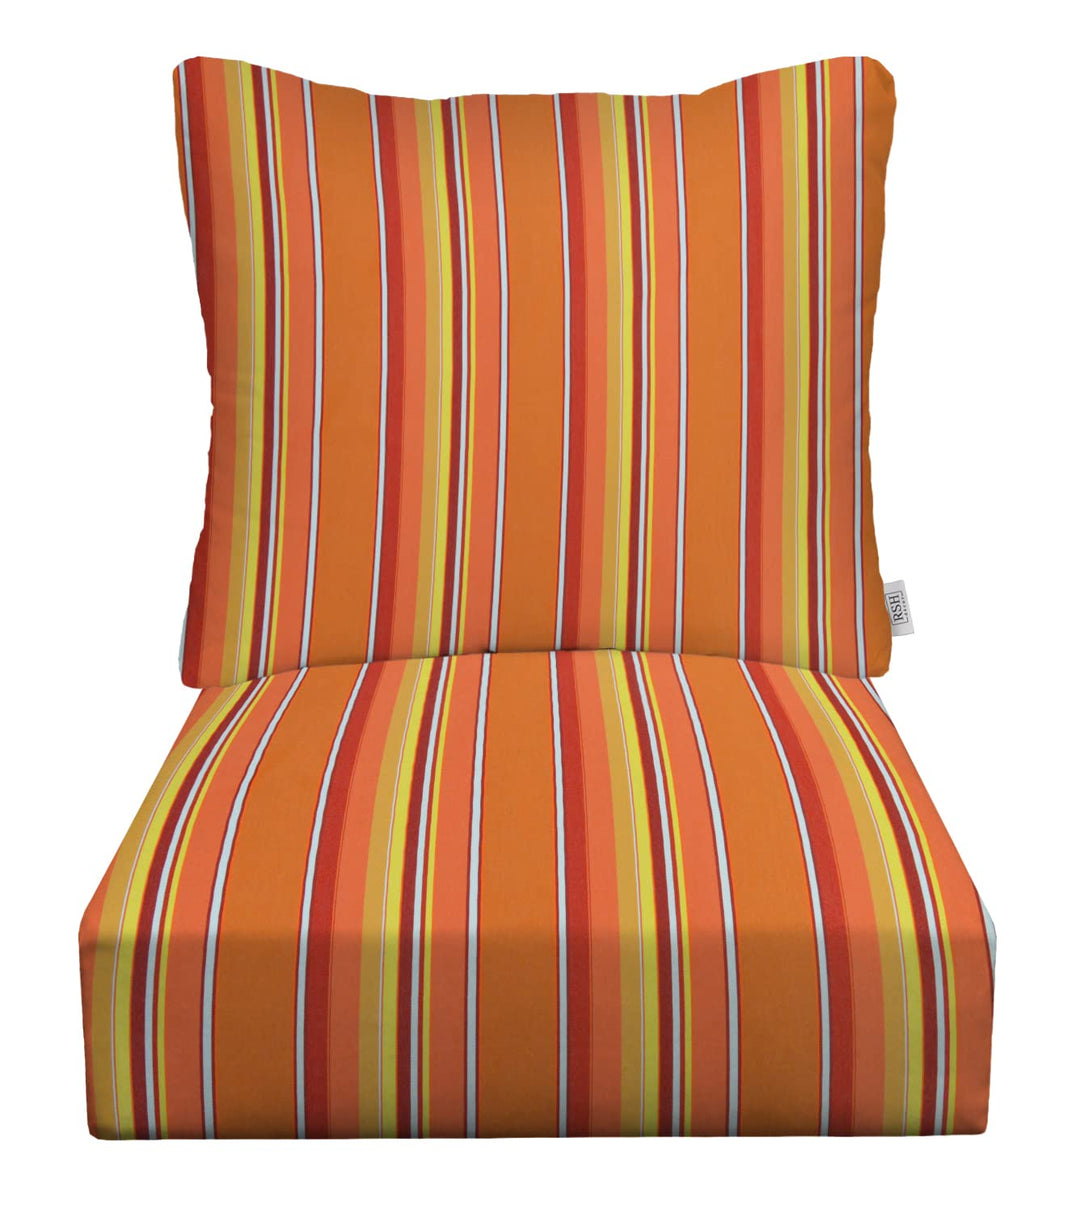 Rsh dcor Indoor Outdoor Sunbrella Deep Seating Cushion Set, 23x 24 x 5 Seat and 24 x 19 Back, Dolce Mango, Orange